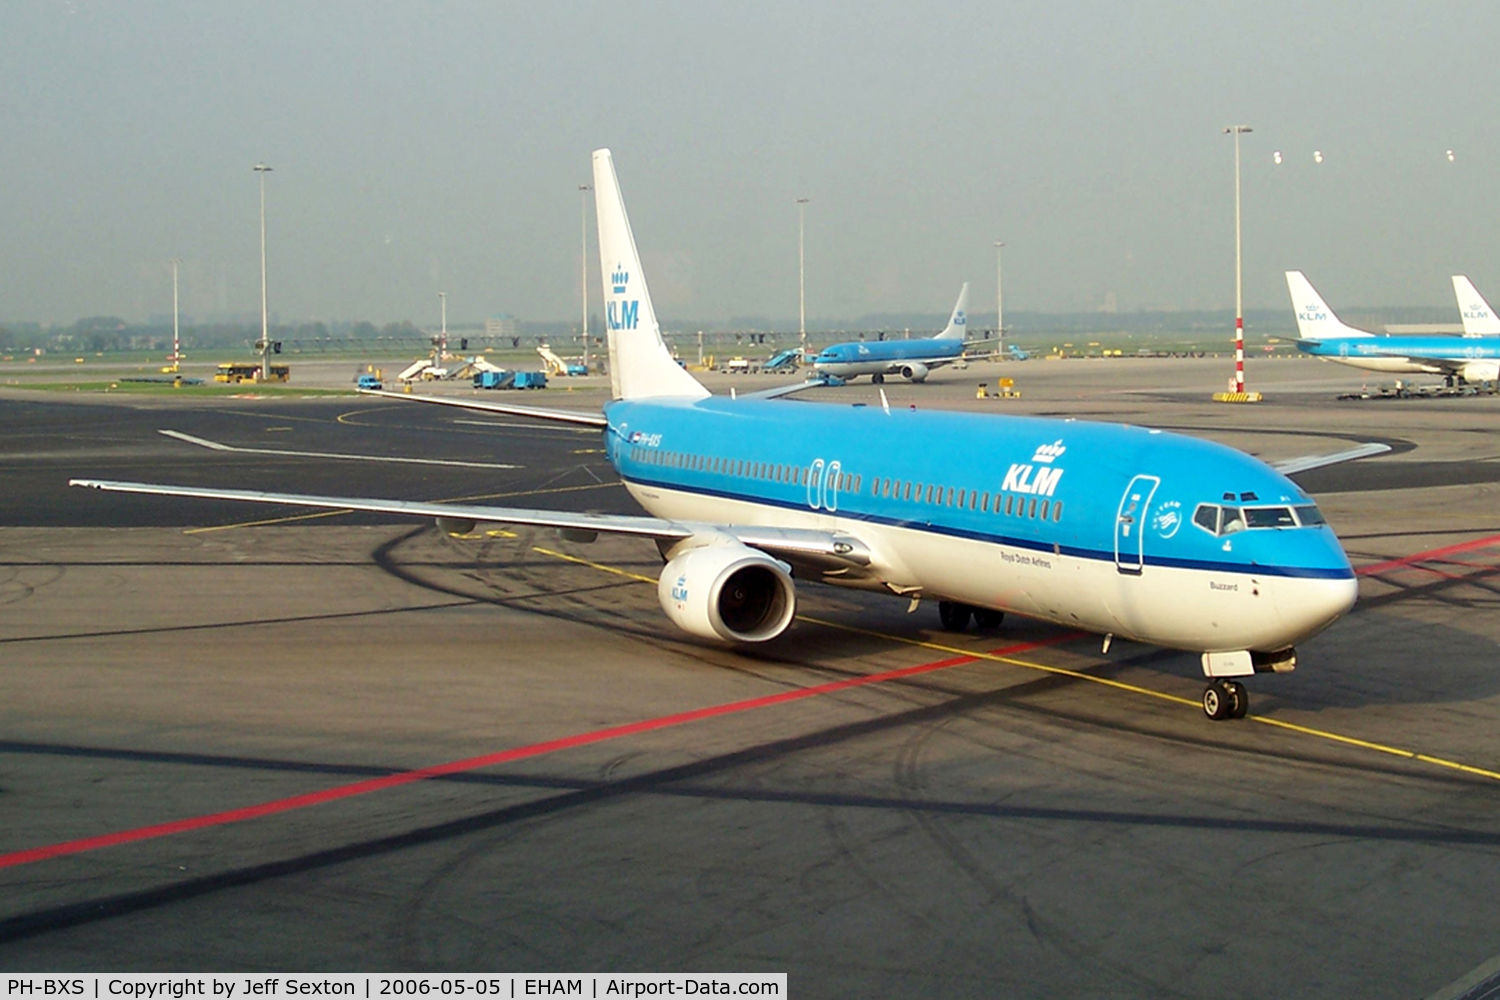 PH-BXS, 2001 Boeing 737-9K2 C/N 29602, Arriving at Schiphol Amsterdam